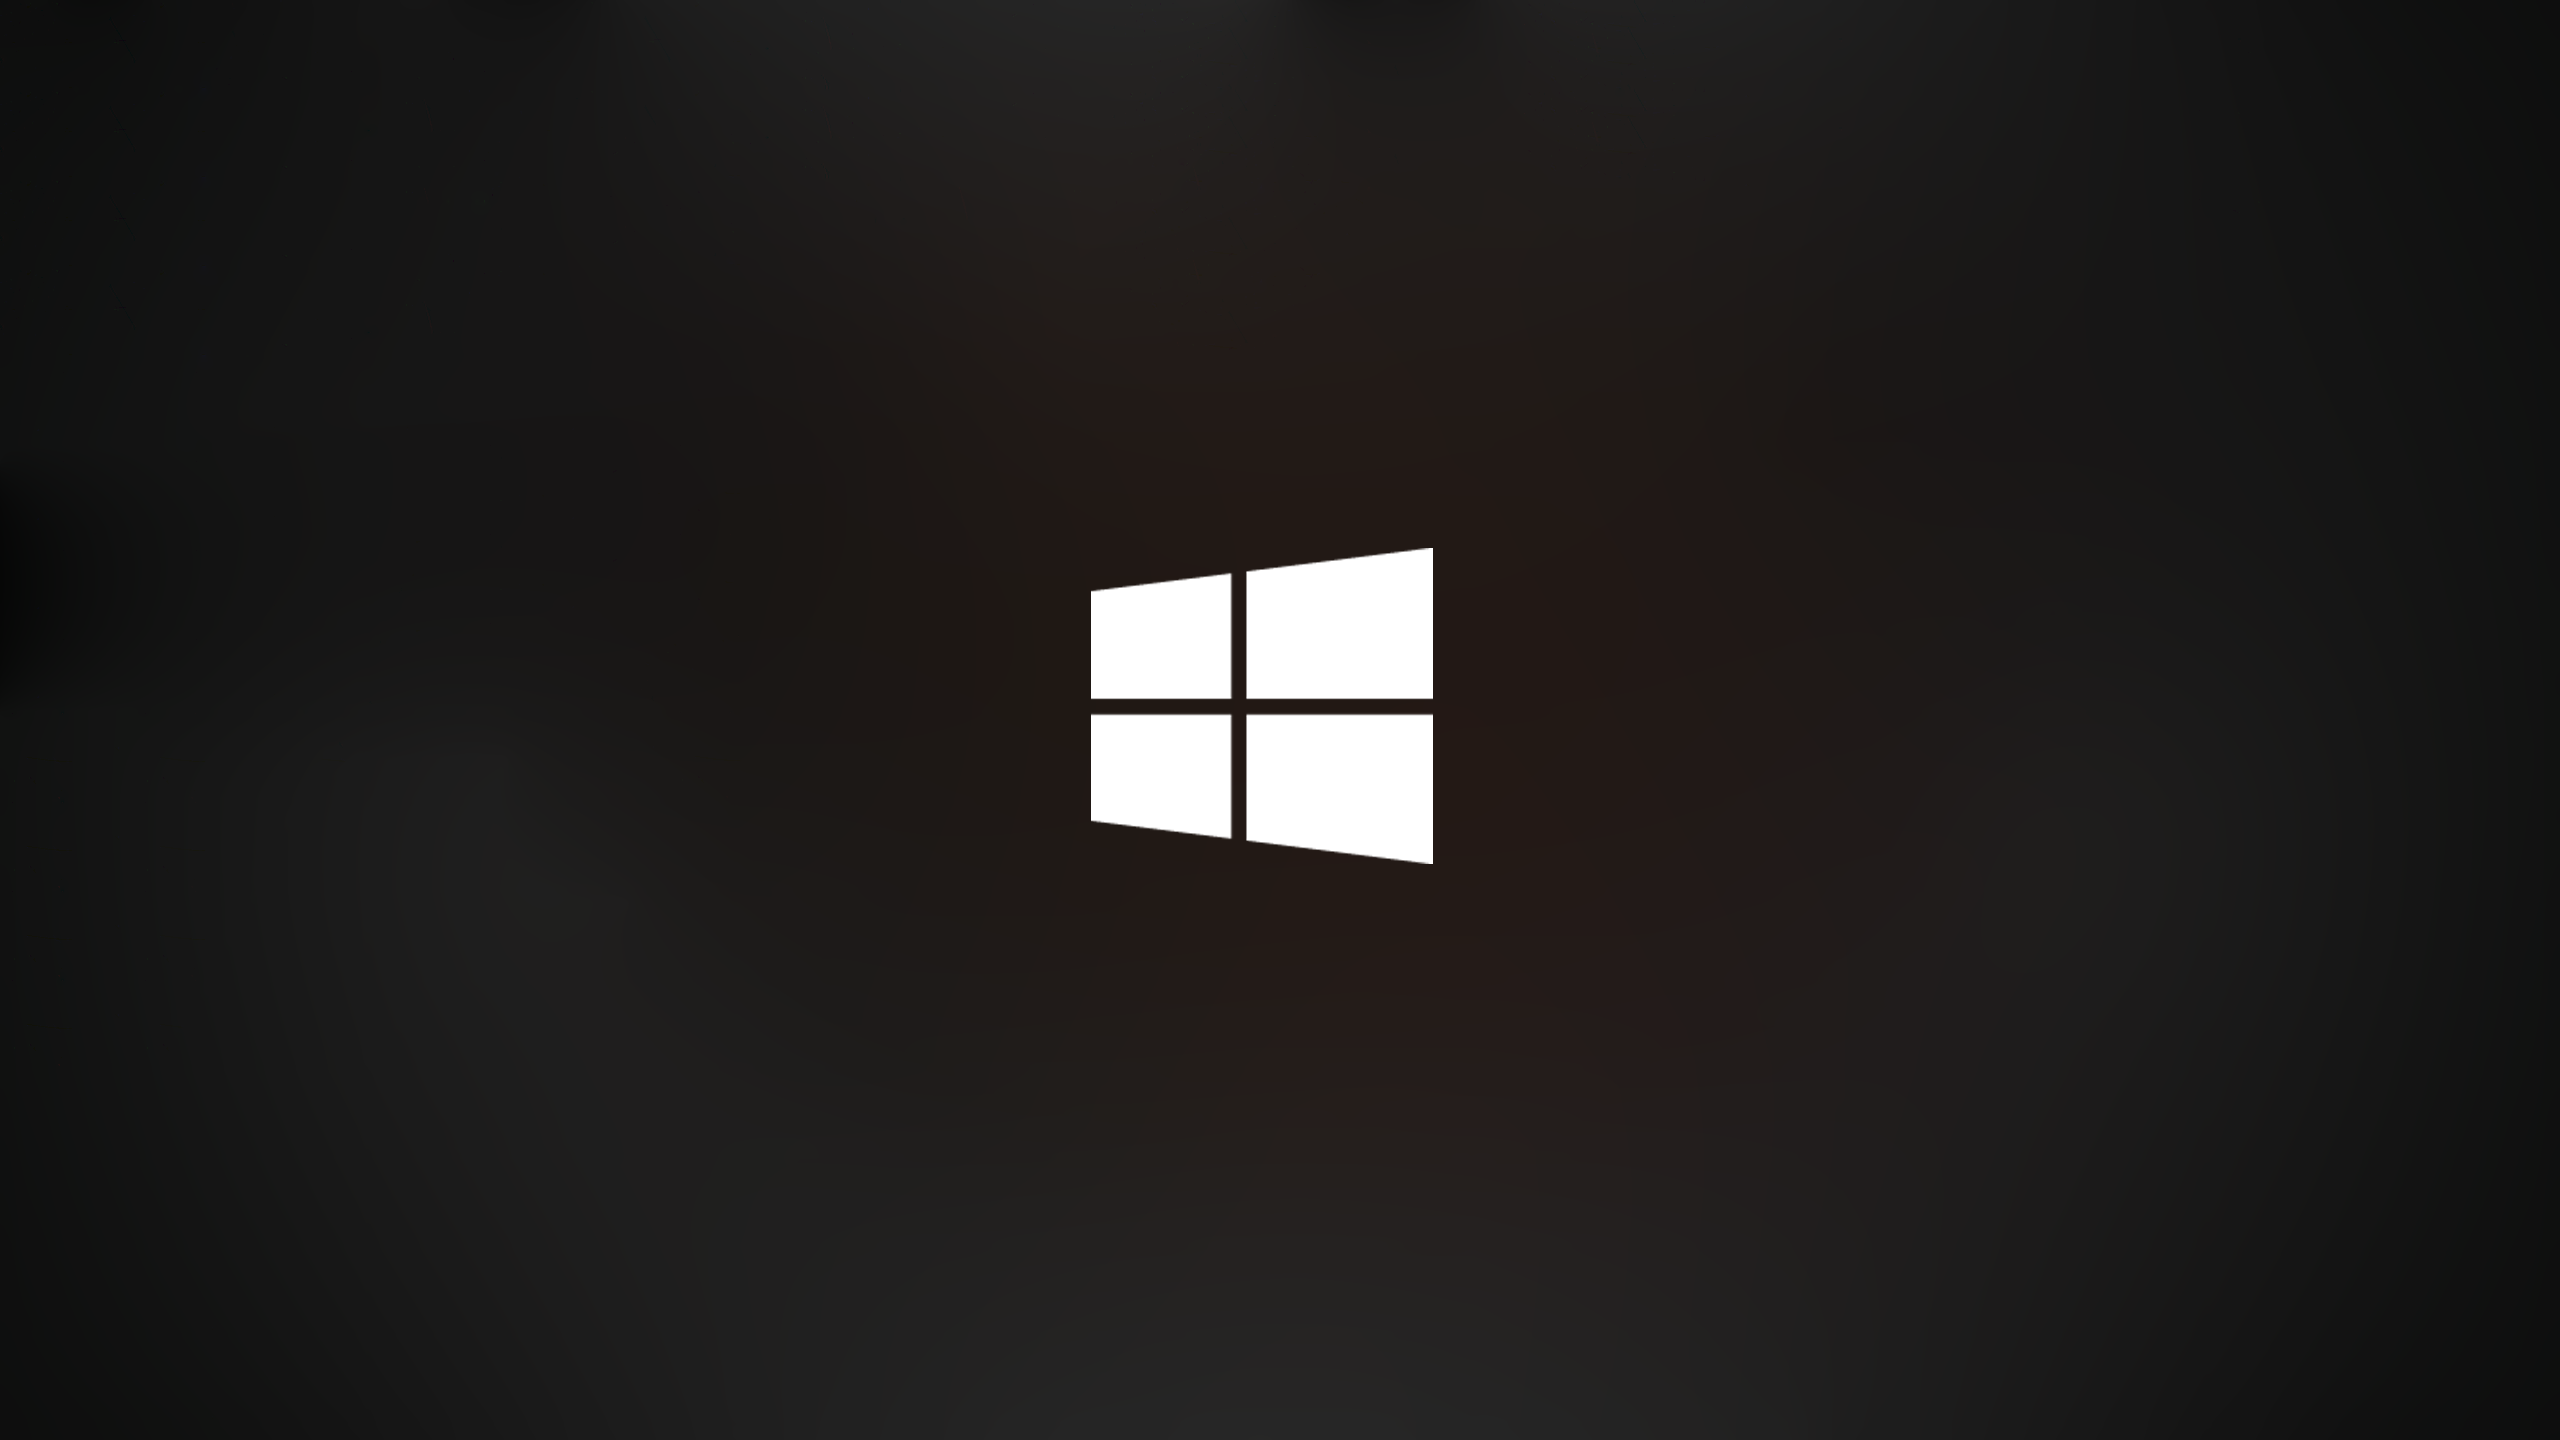 General 2560x1440 Windows 10 black background minimalism Microsoft monochrome logo simple background operating system